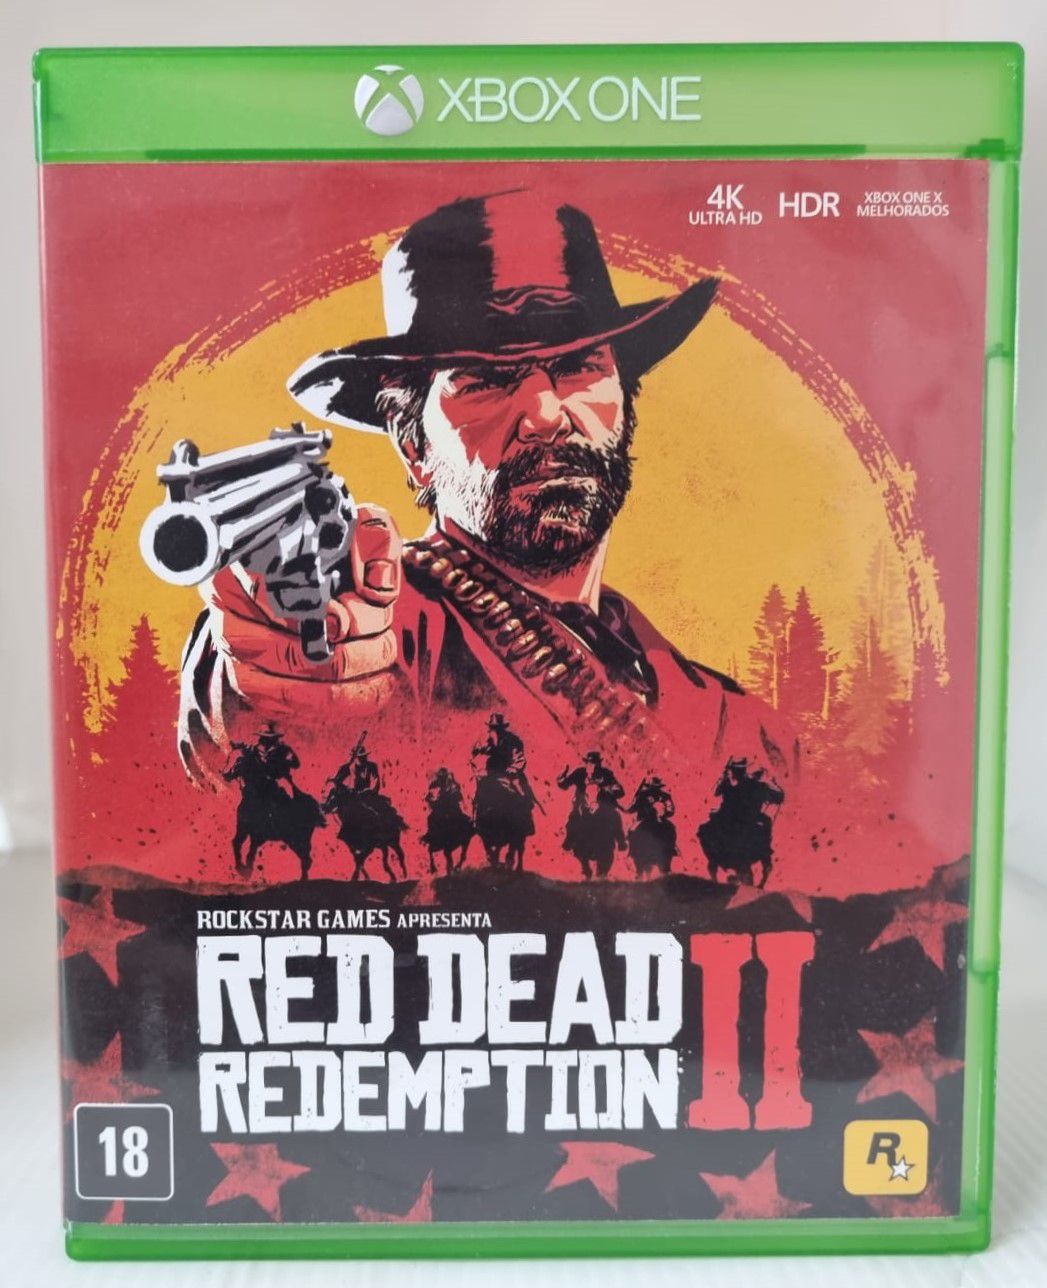 Red Dead Redemption - PlayStation 4 MIDIA FISICA - ROCKSTAR